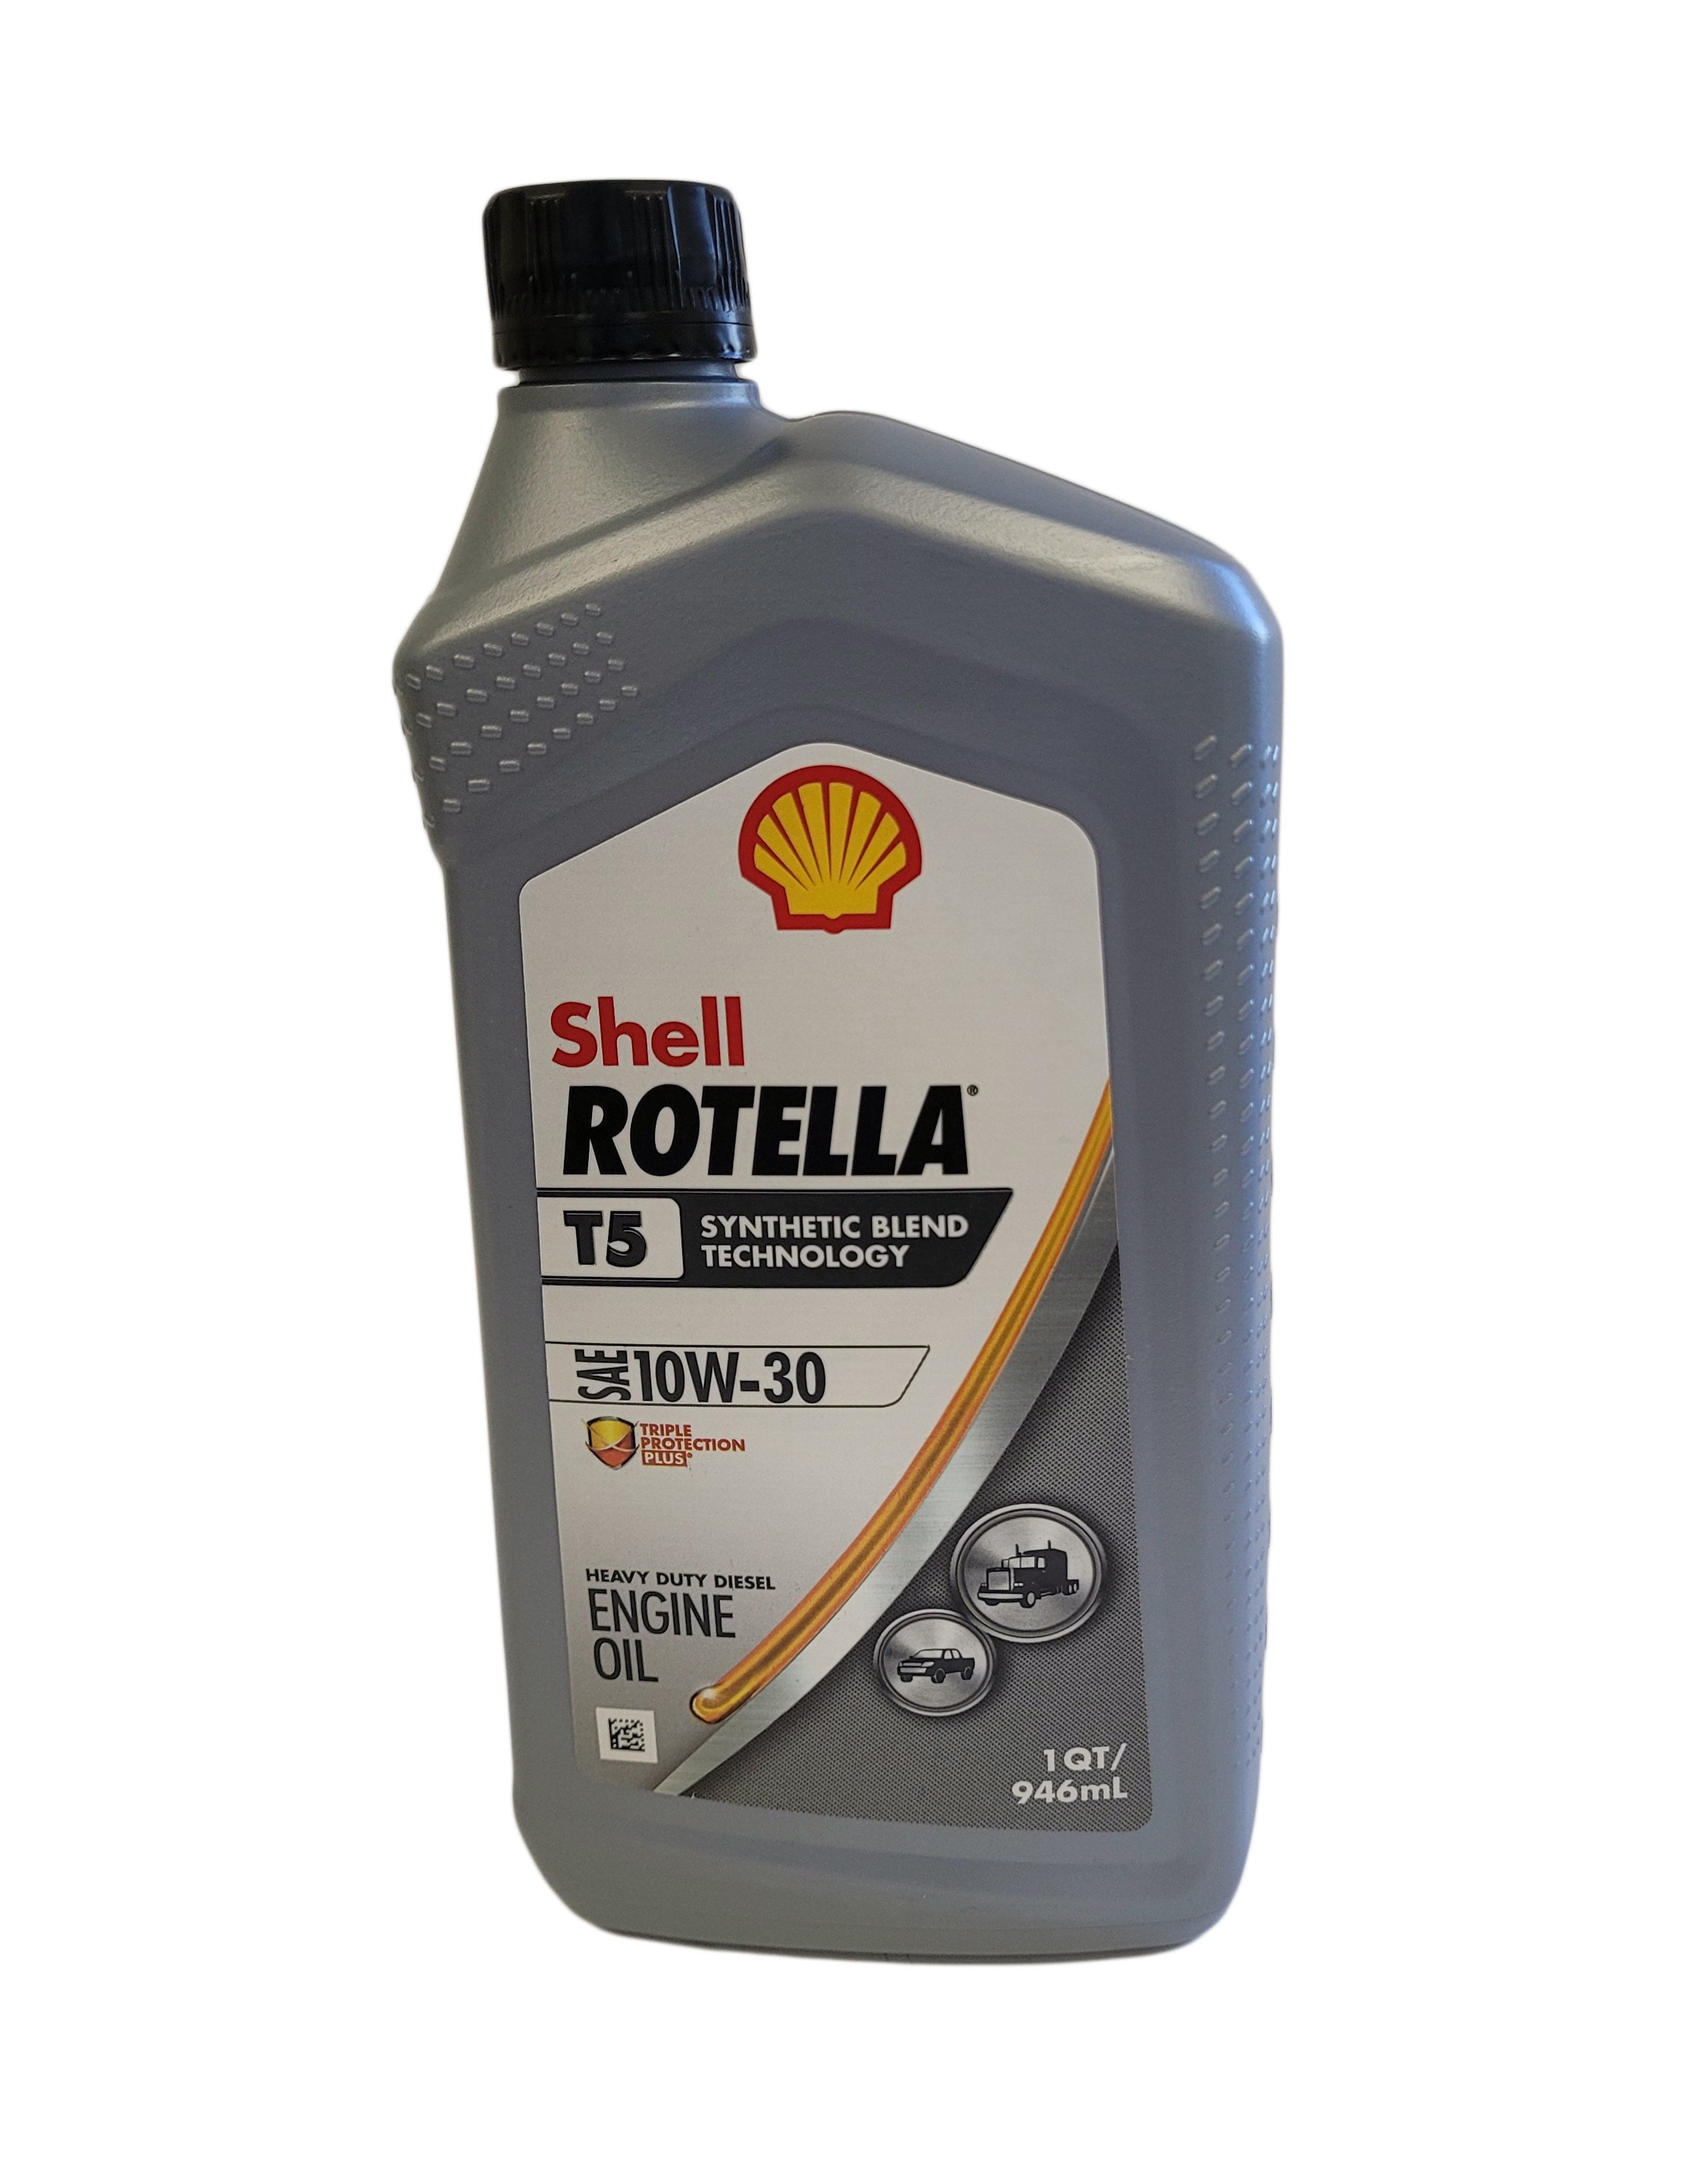 shell-rotella-t5-diesel-engine-oil-hd-synthetic-blend-10w-30-walmart